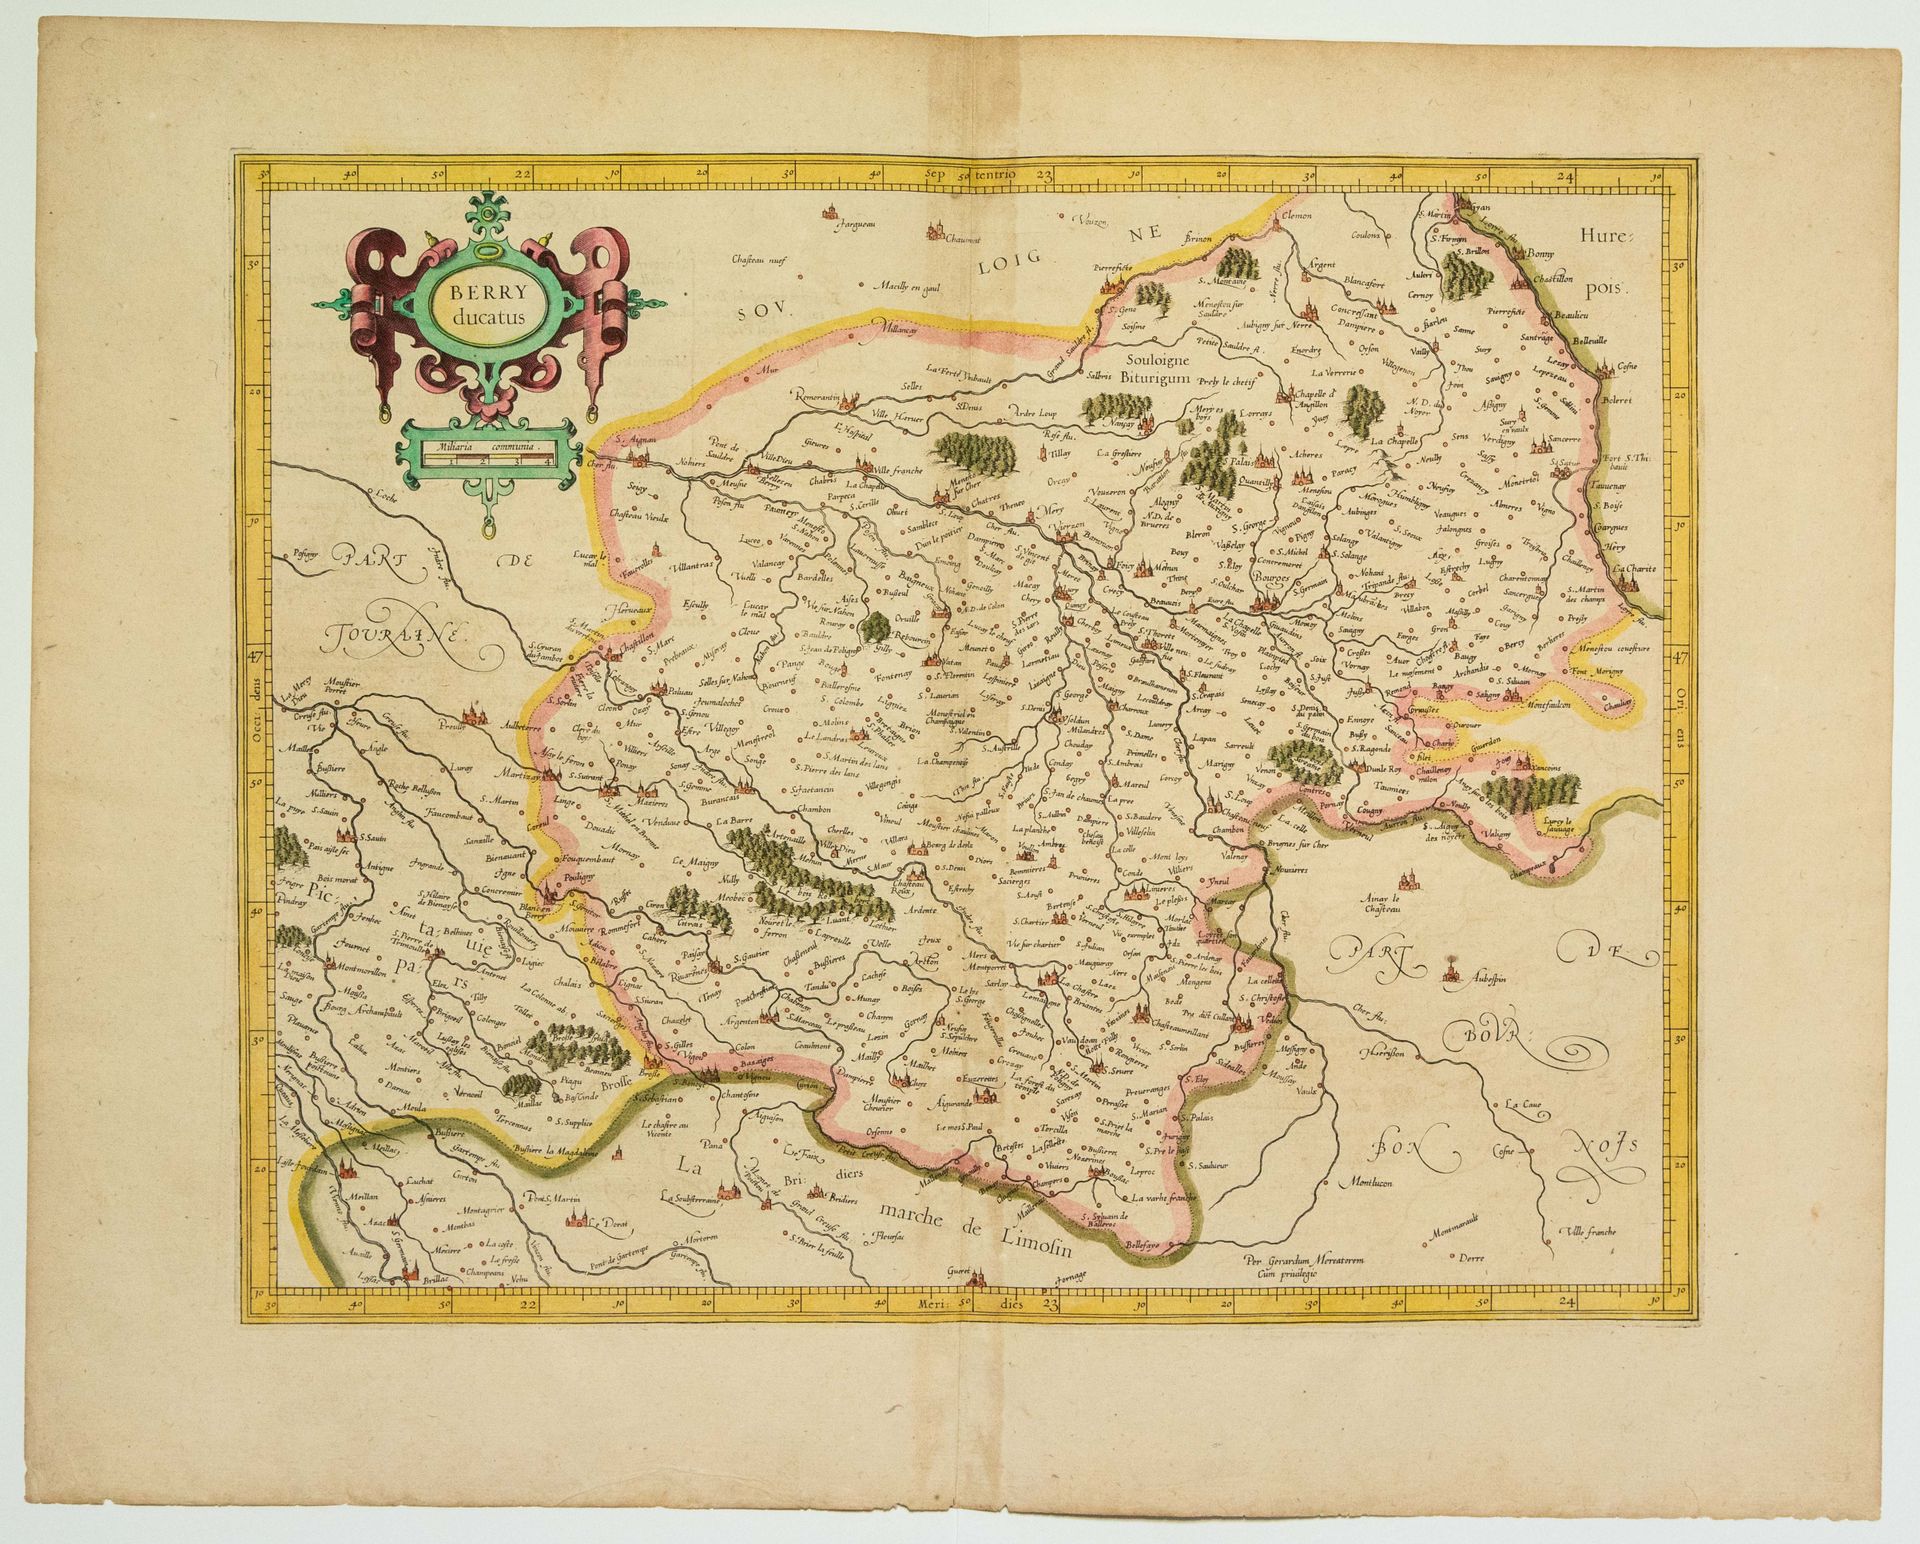 Null Karte aus dem 17. Jahrhundert: "BERRY Ducatis" (ca. 1634) (54 x 43 cm) Zust&hellip;